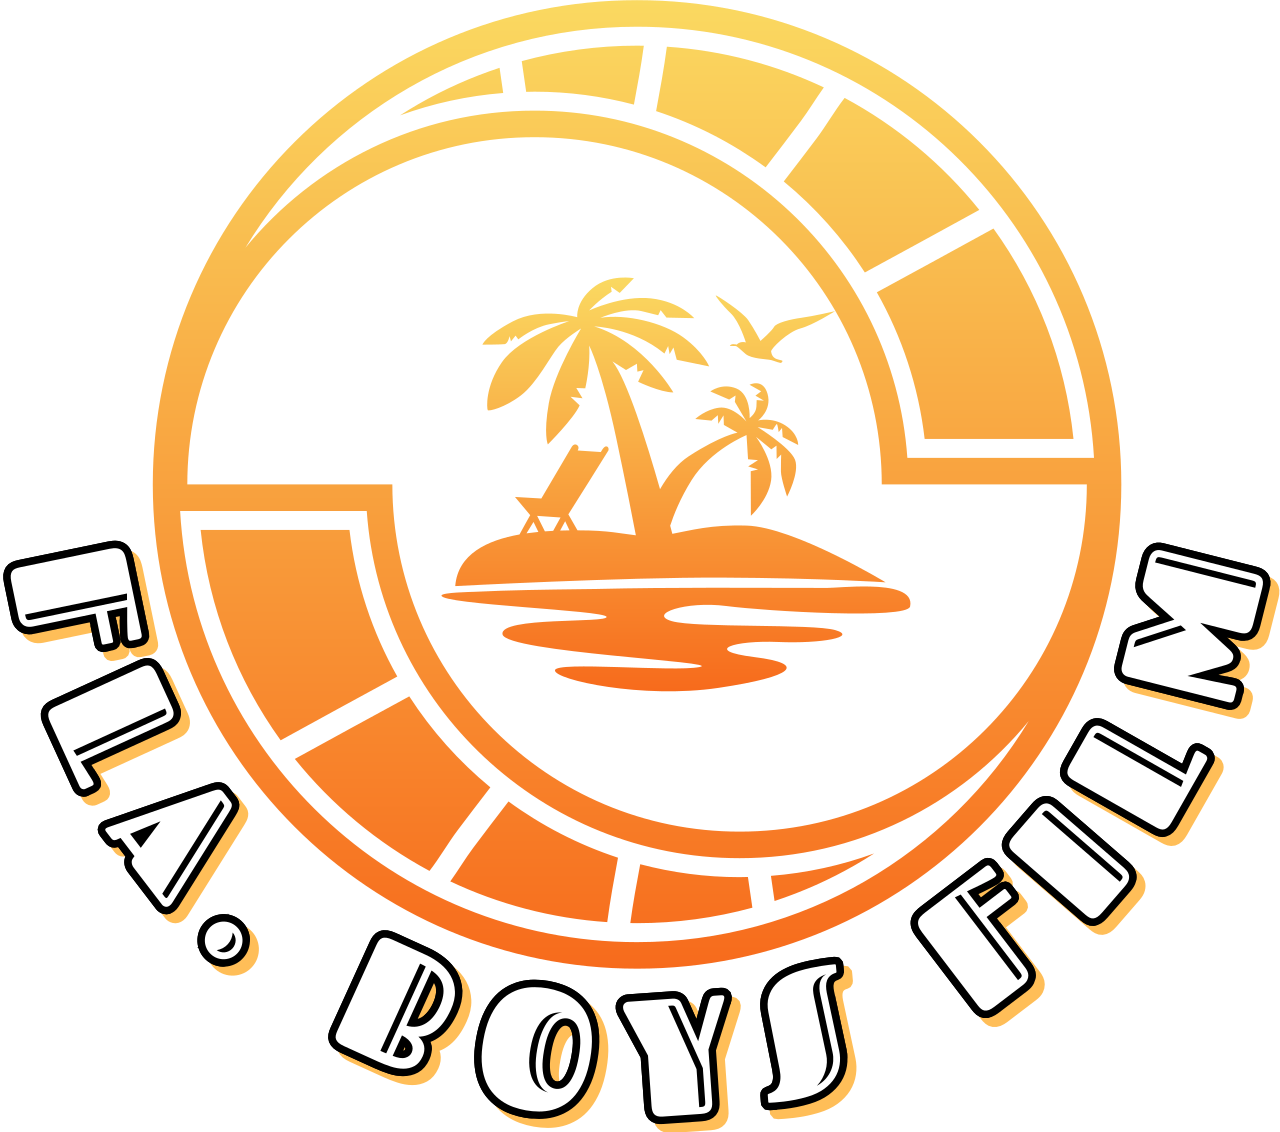 FLA. BOYS FILM's logo